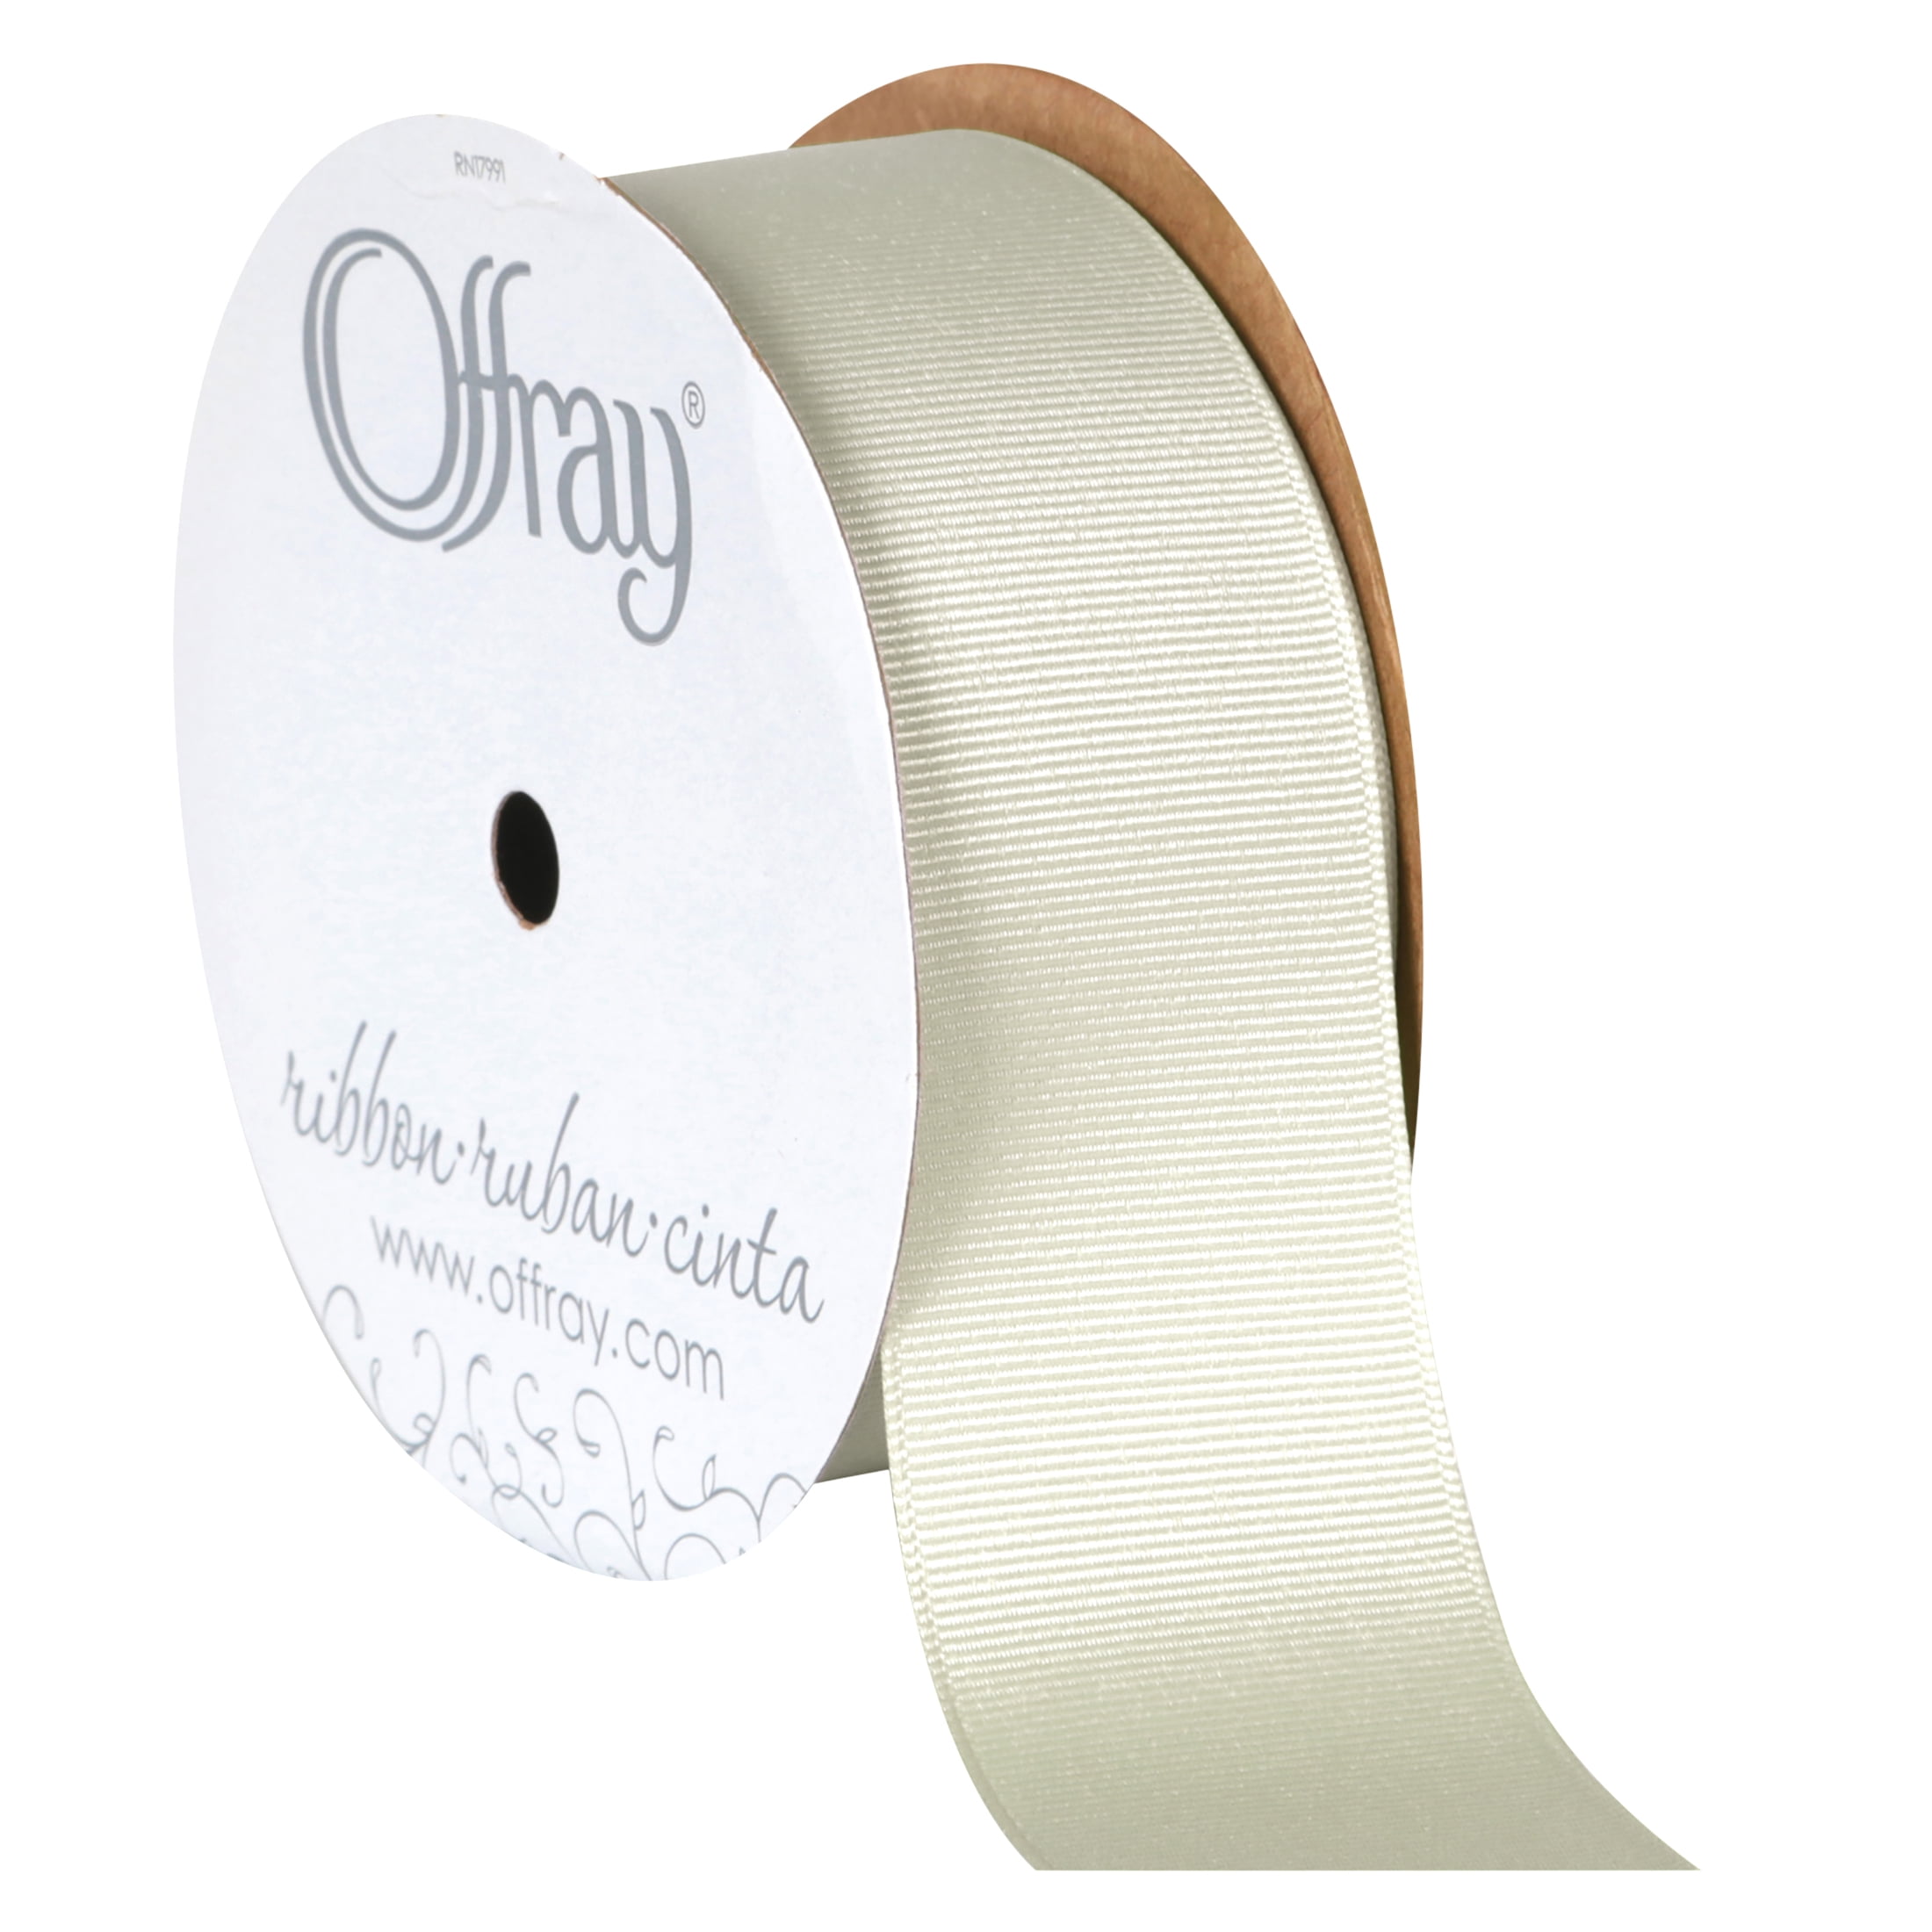 Offray Ribbon, Antique White 1 1/2 inch Grosgrain Polyester Ribbon, 12 feet